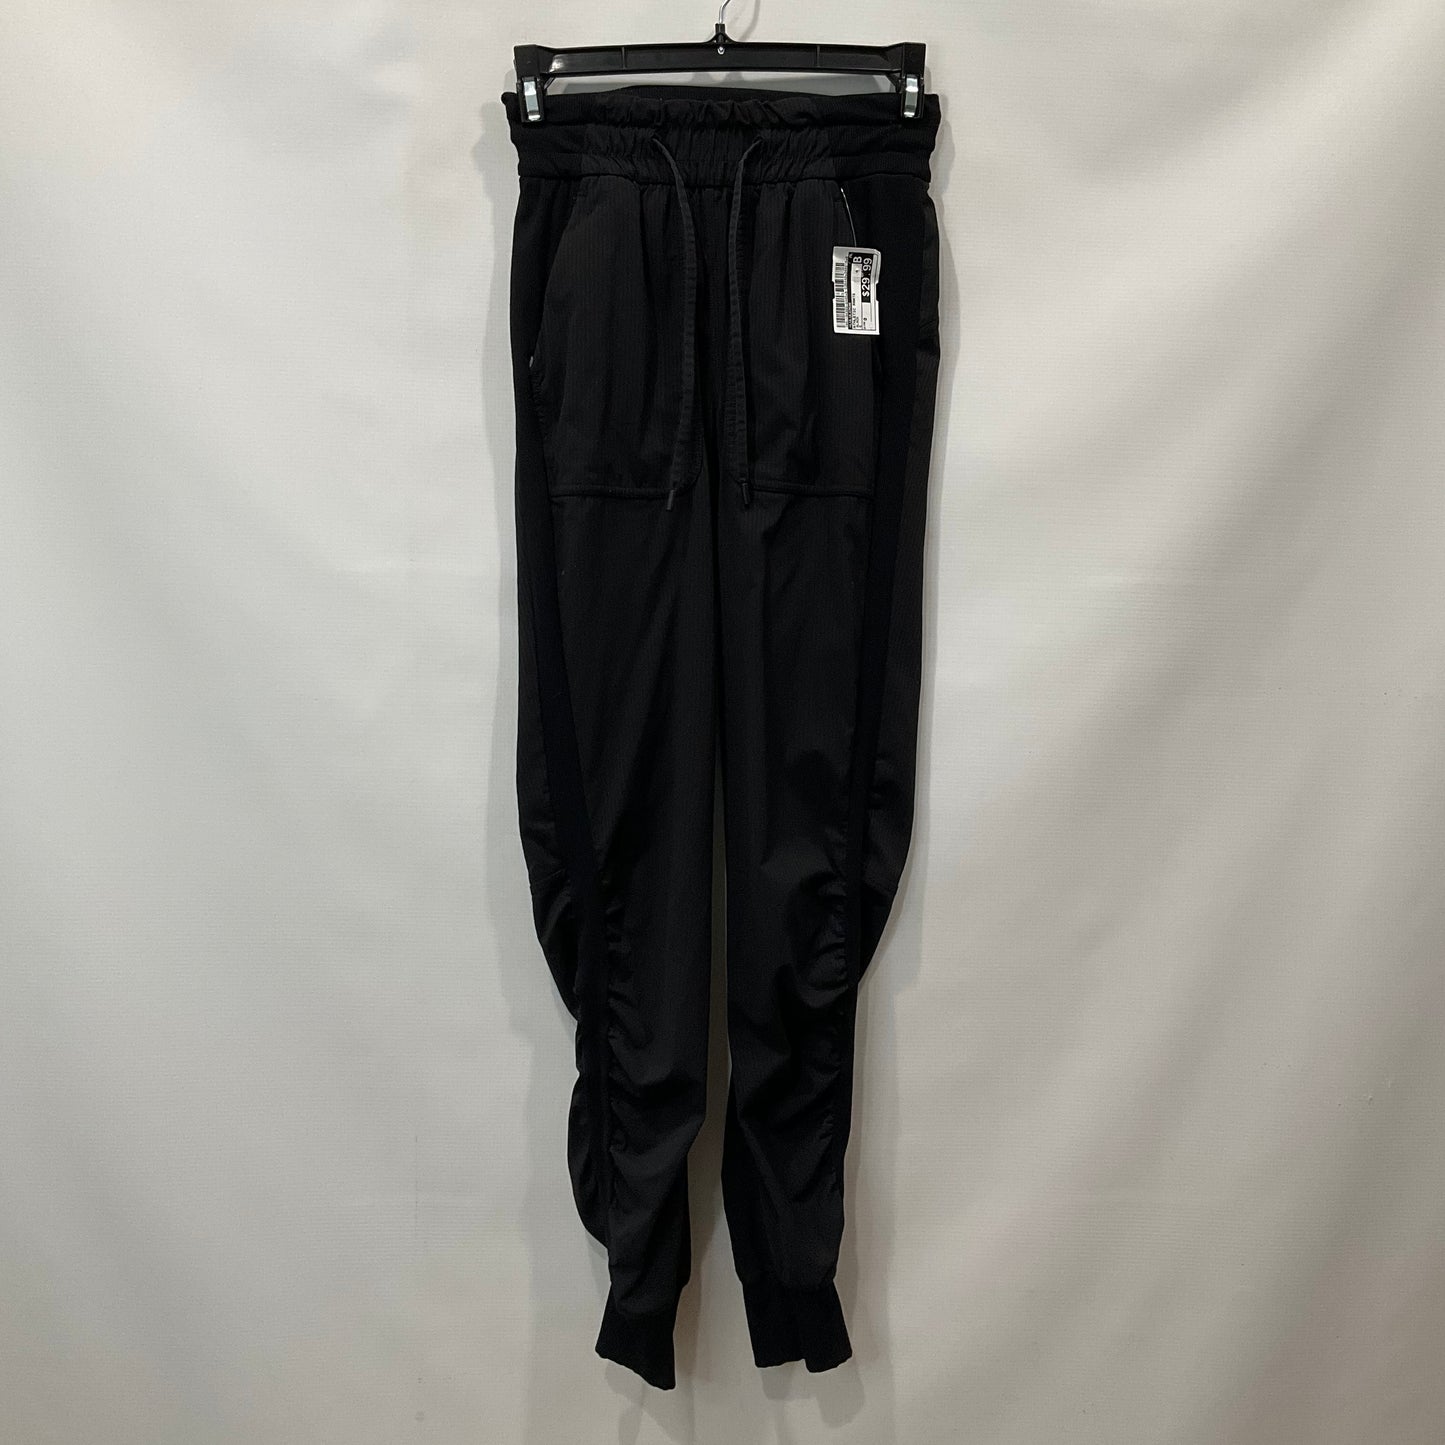 Athletic Pants By Lululemon  Size: 0